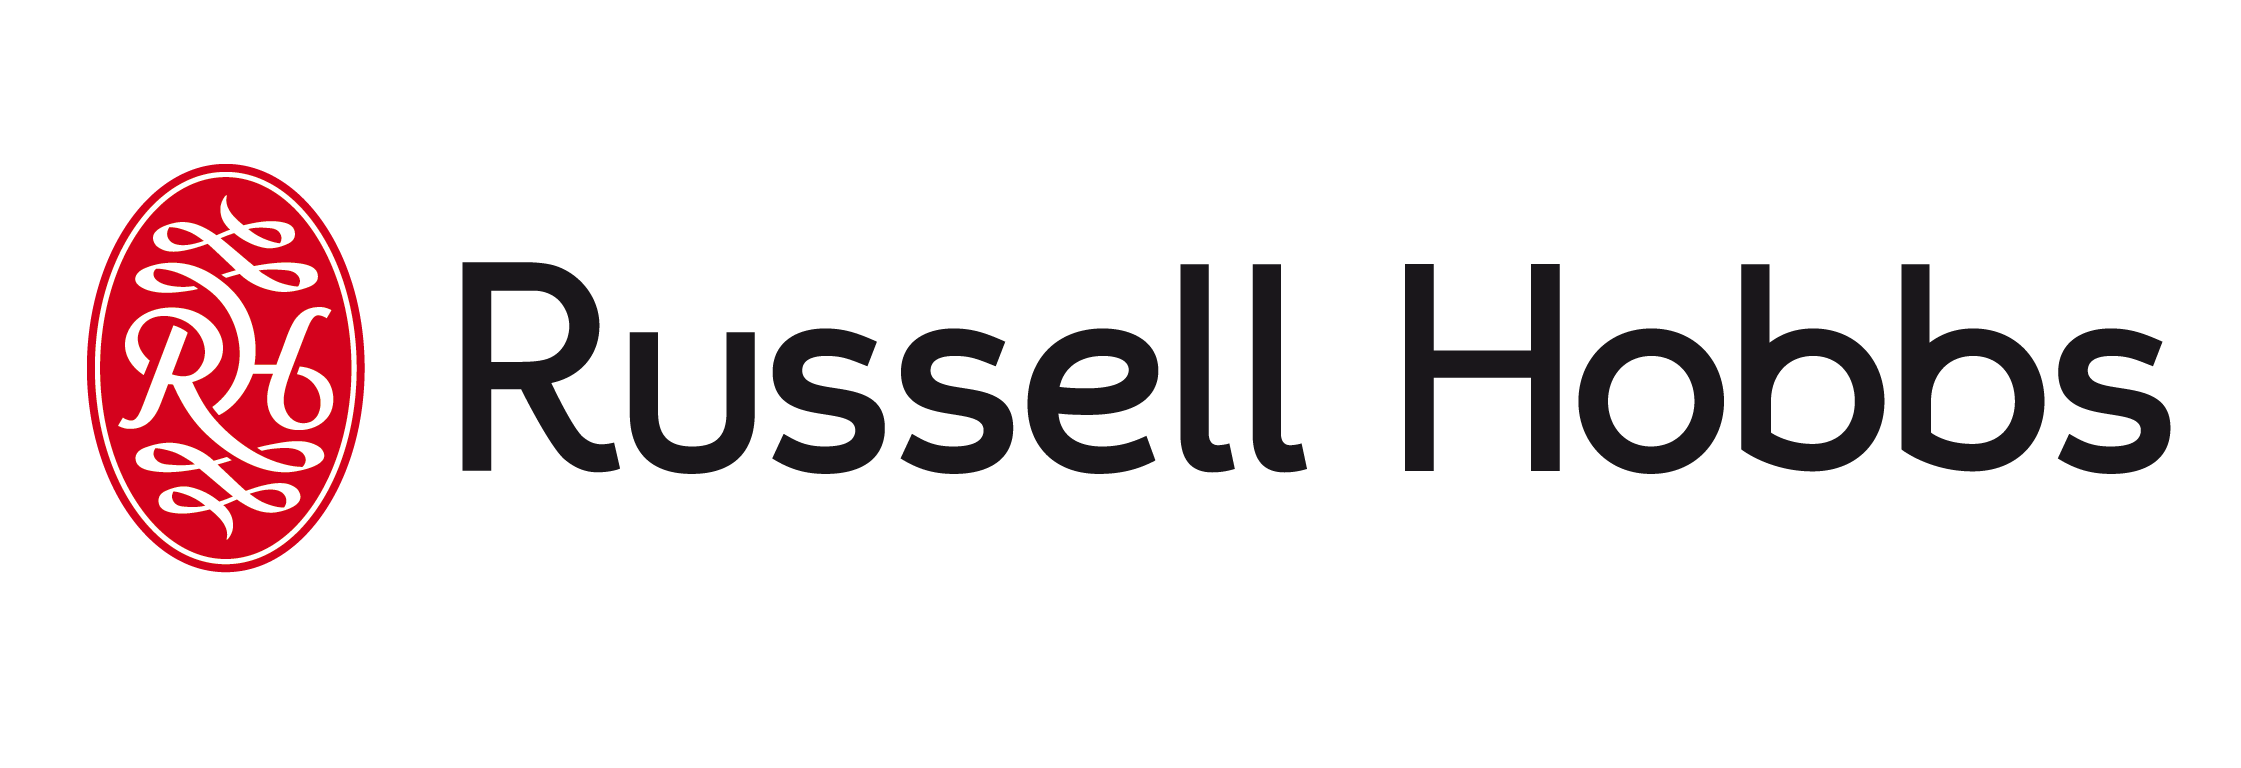 Russell Hobbs Logo Linear